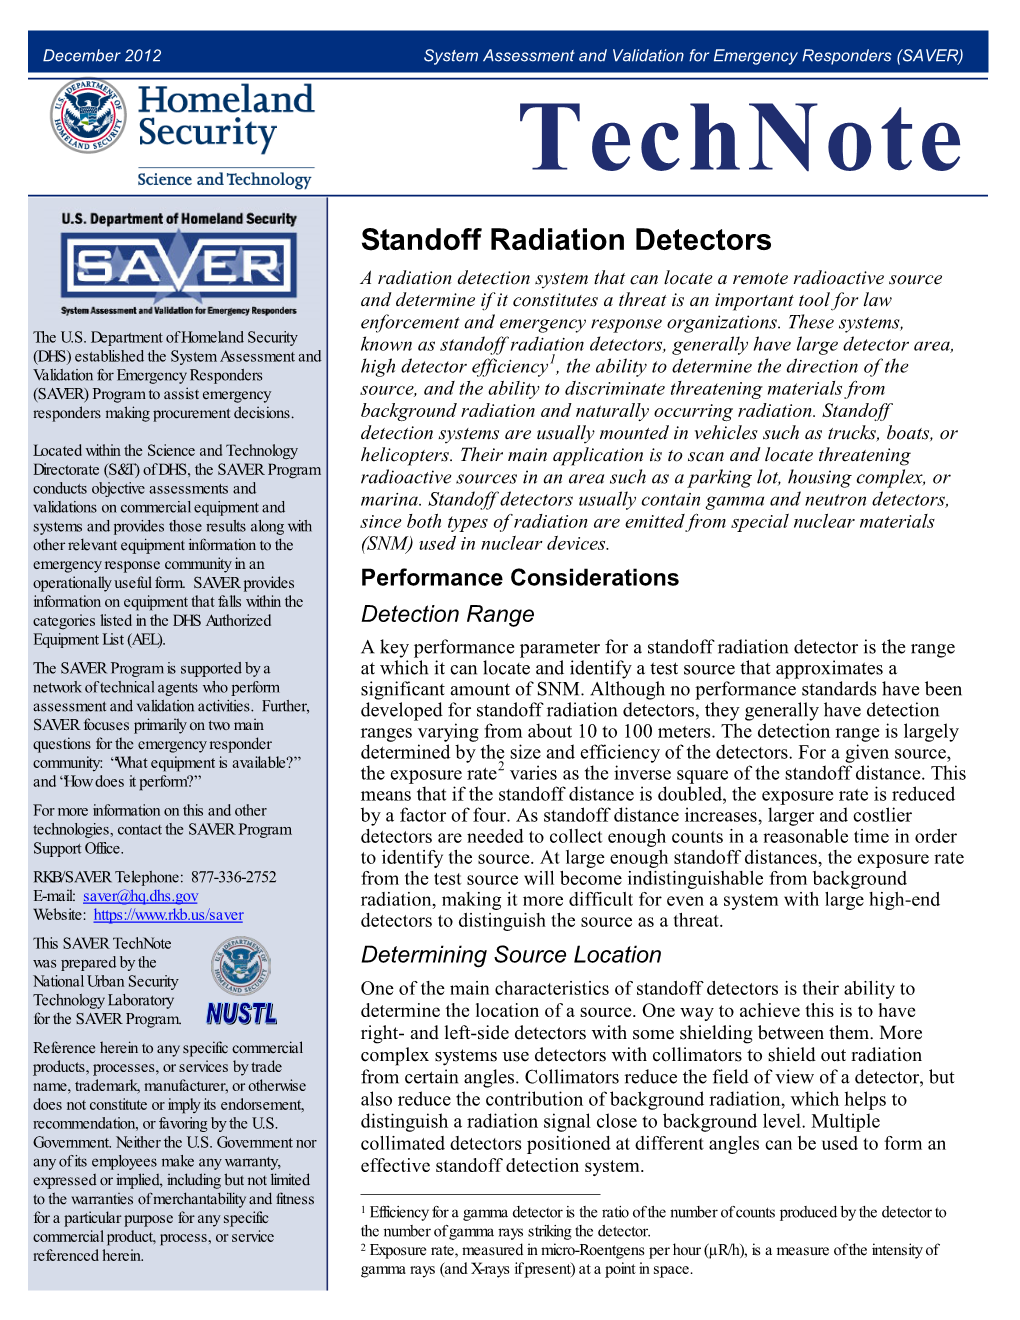 Standoff Radiation Detectors Technote